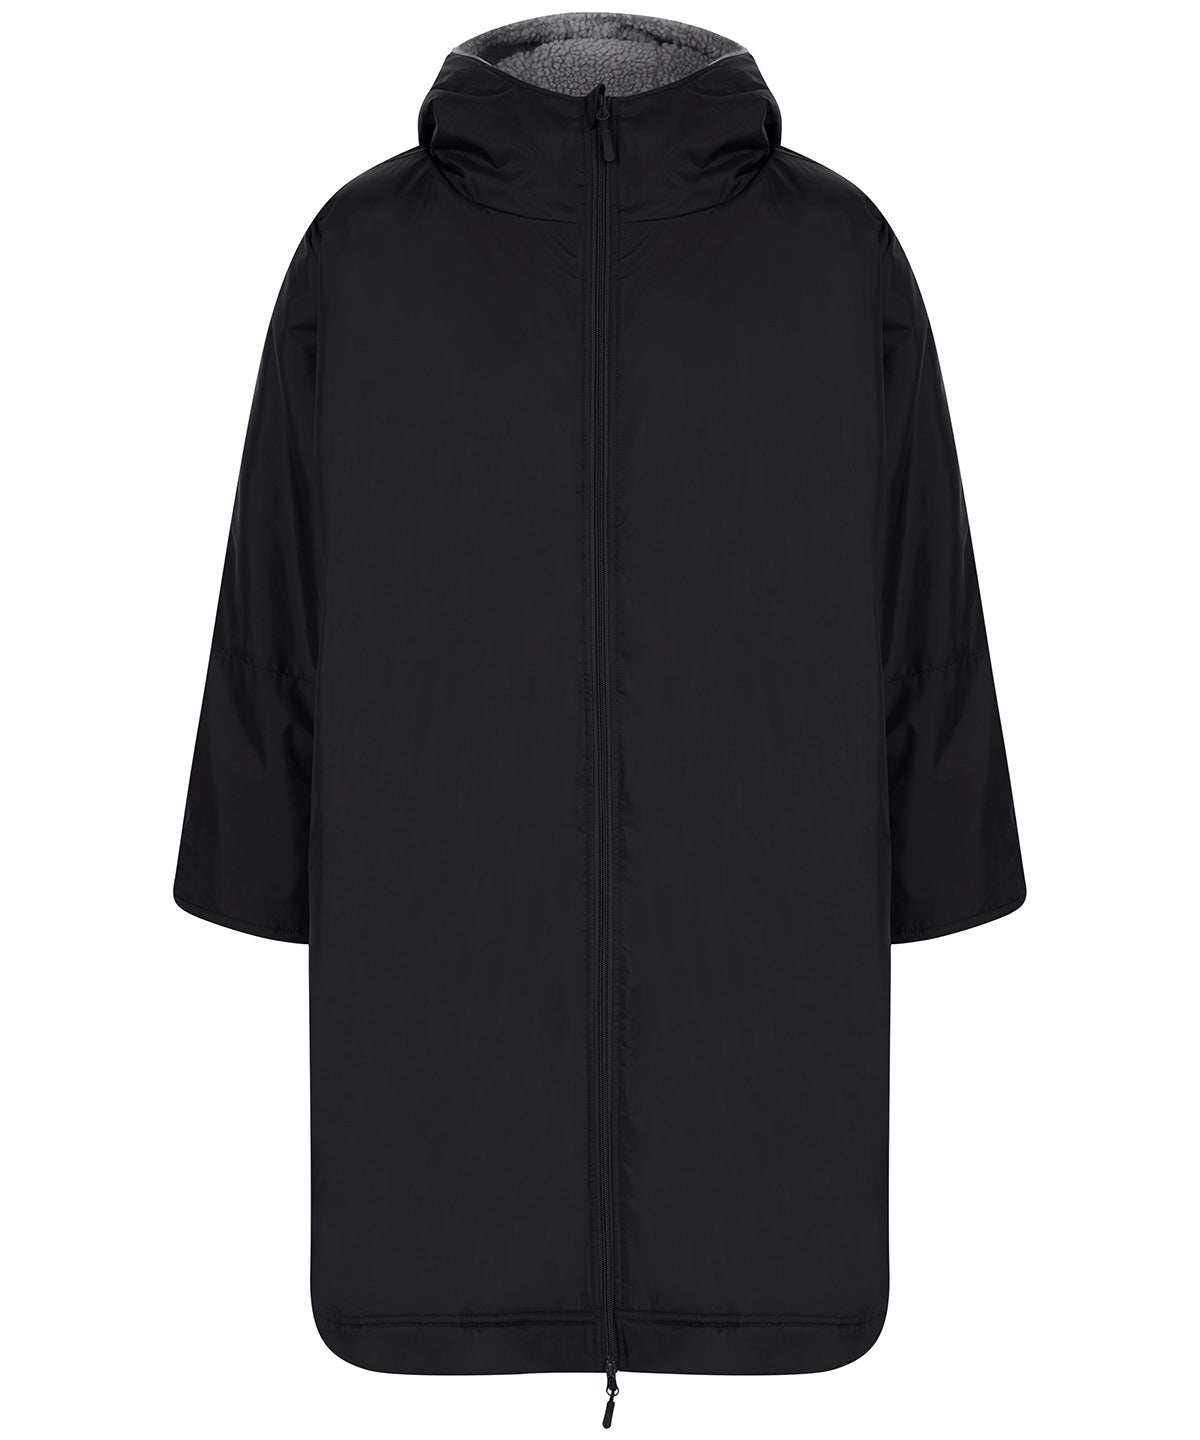 Personalised Robes - Black Finden & Hales Kids all-weather robe